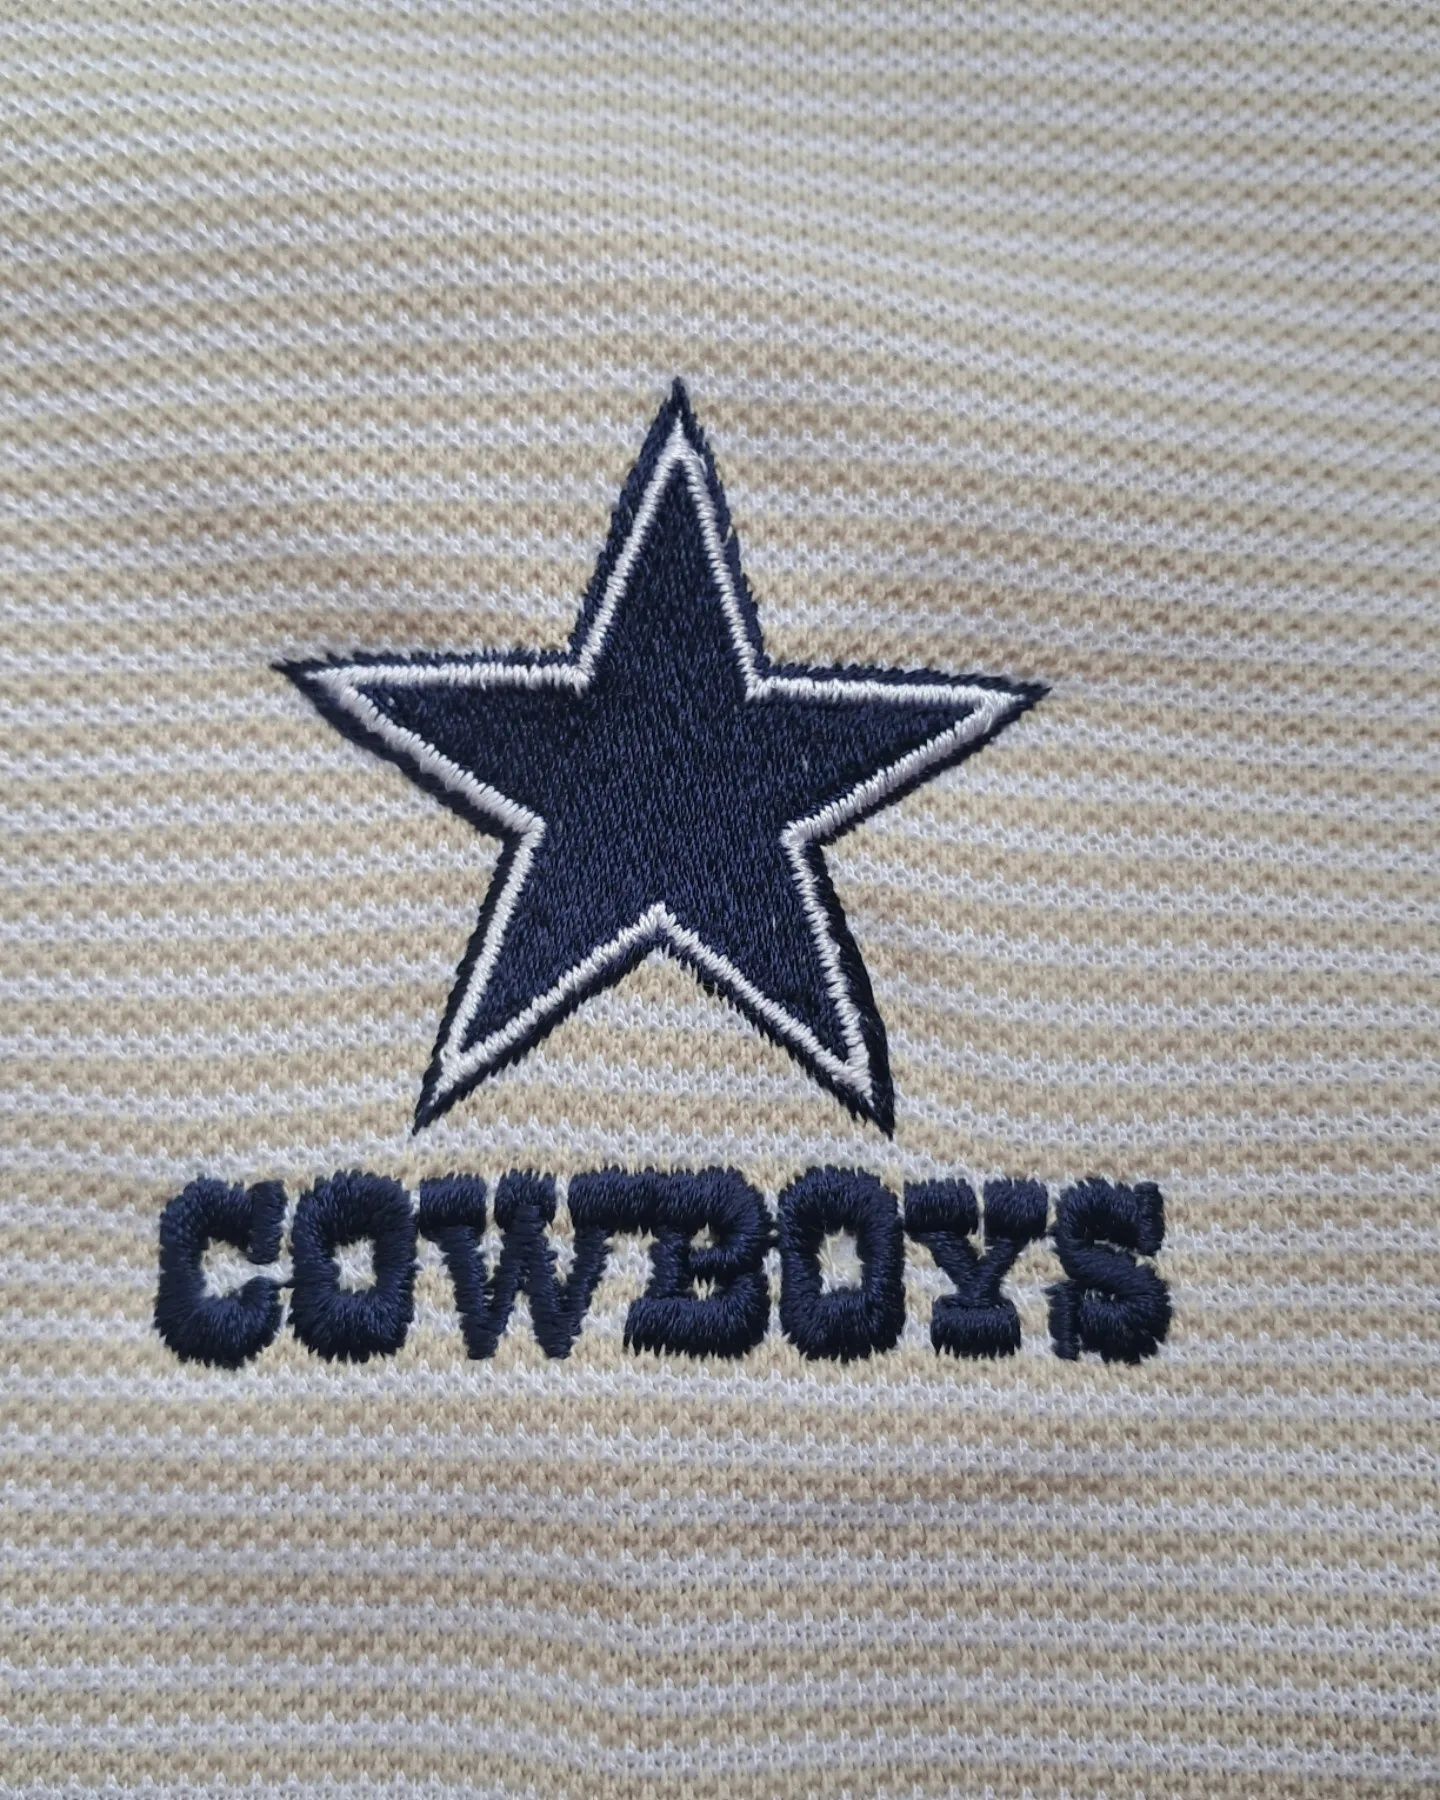 Поло футболка NFL Dallas Cowboys американский футбол rap nba